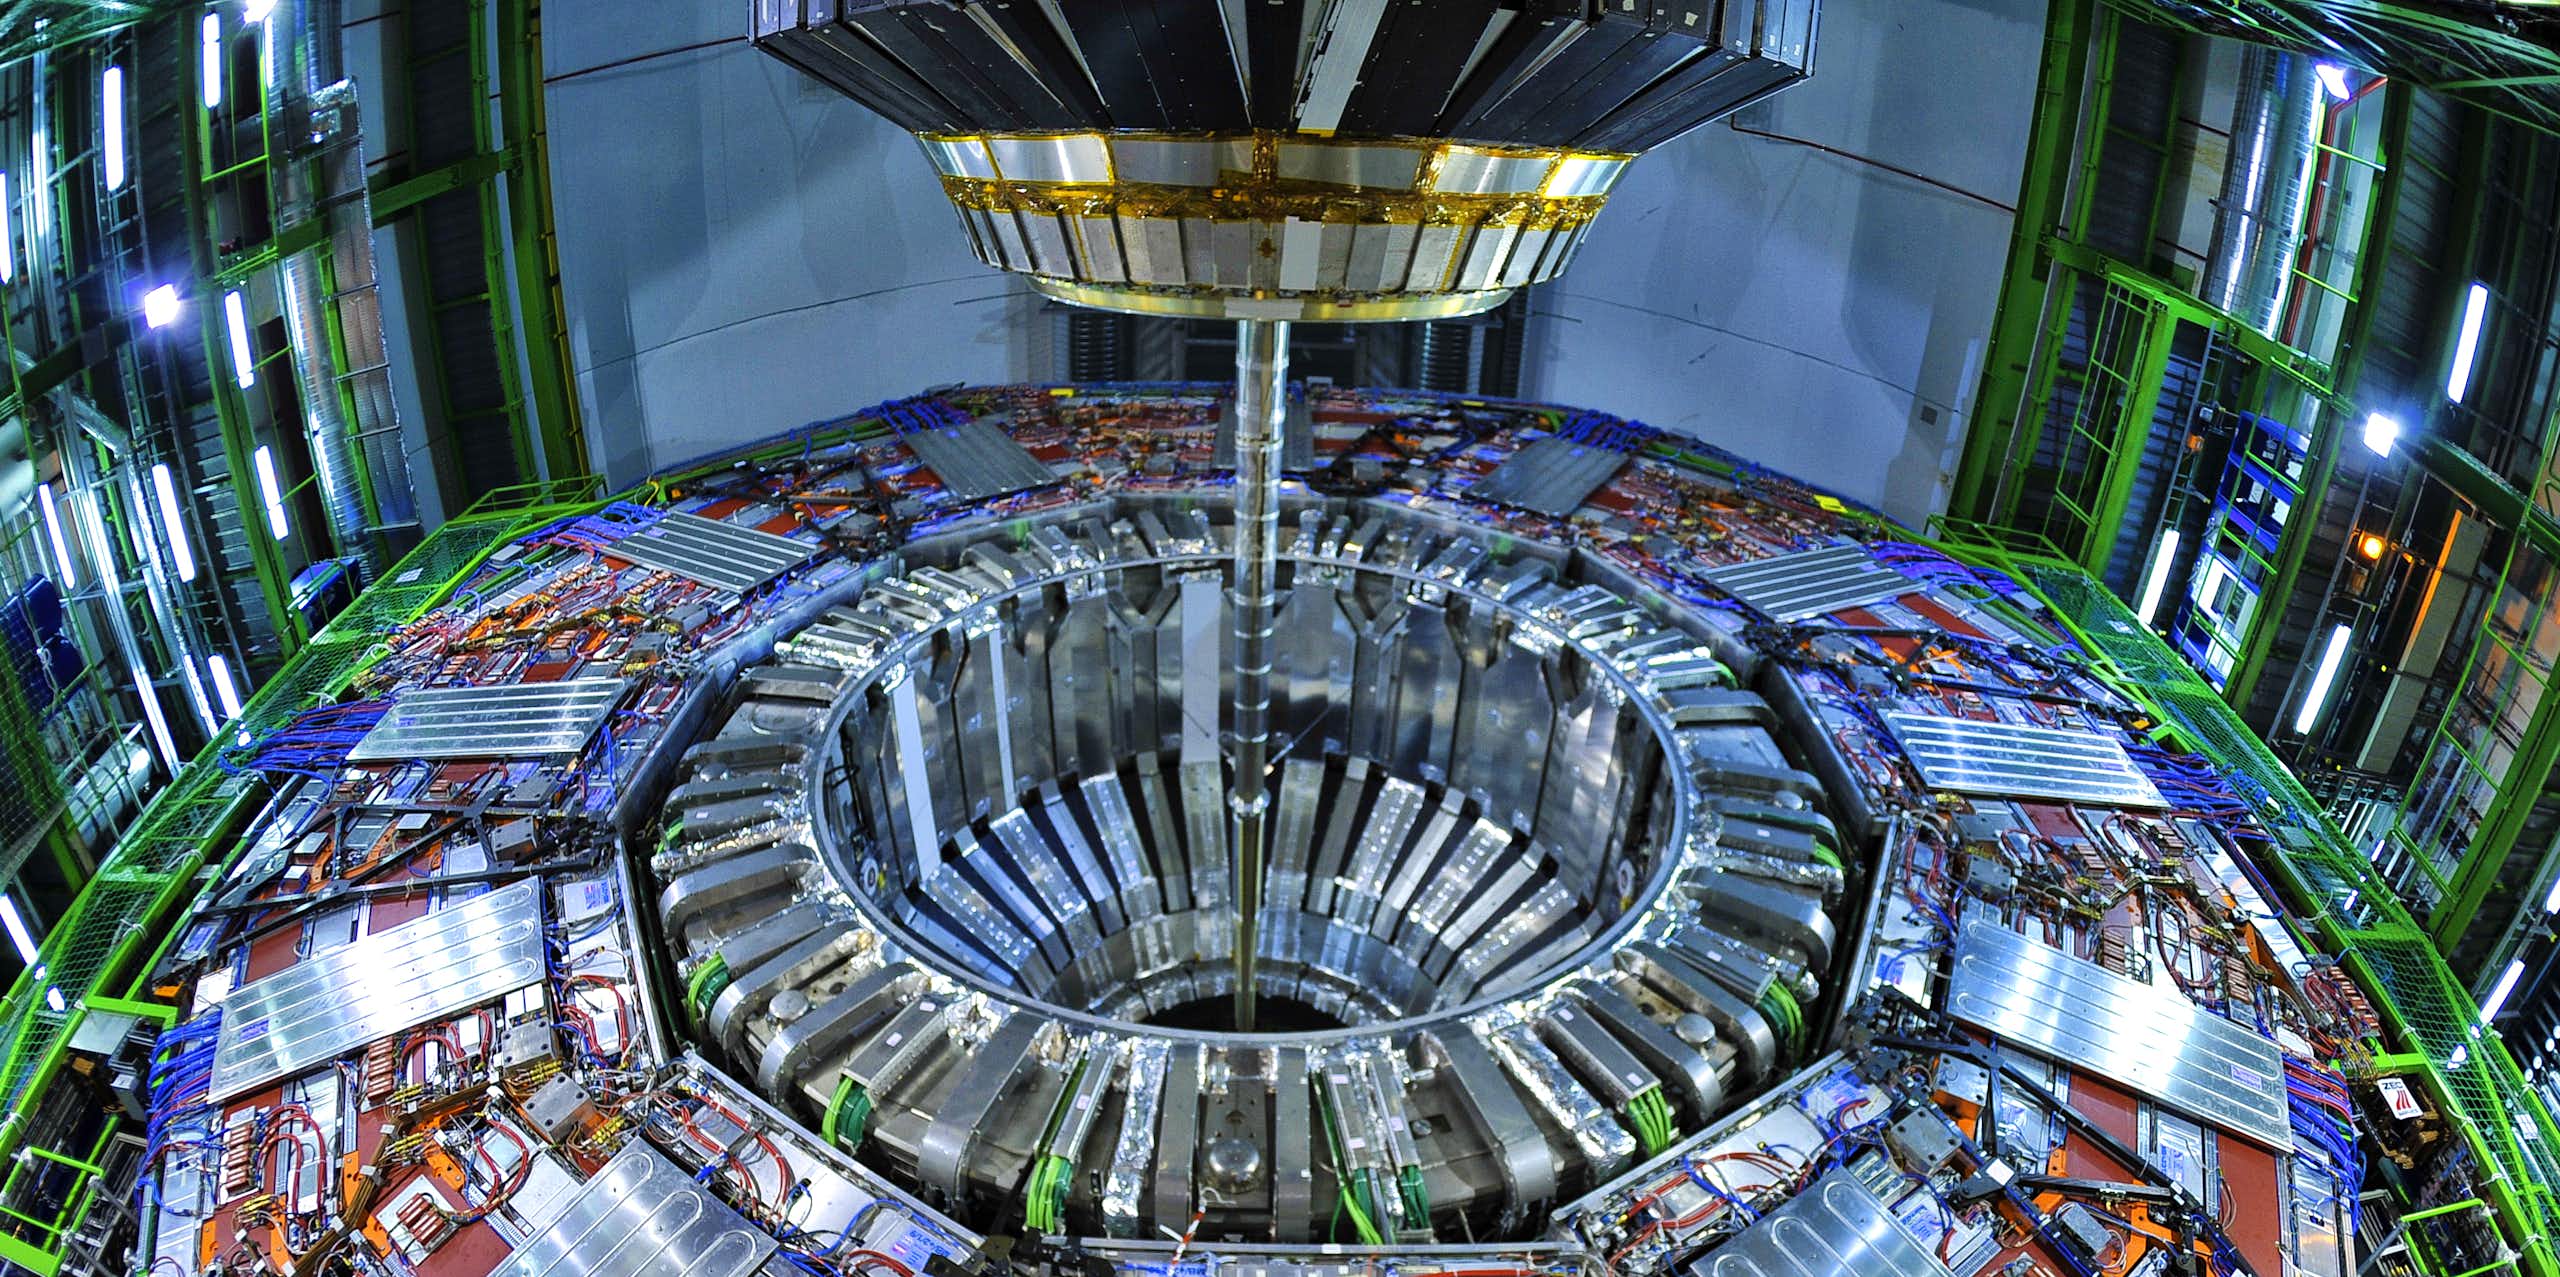 The LHC at Cern.